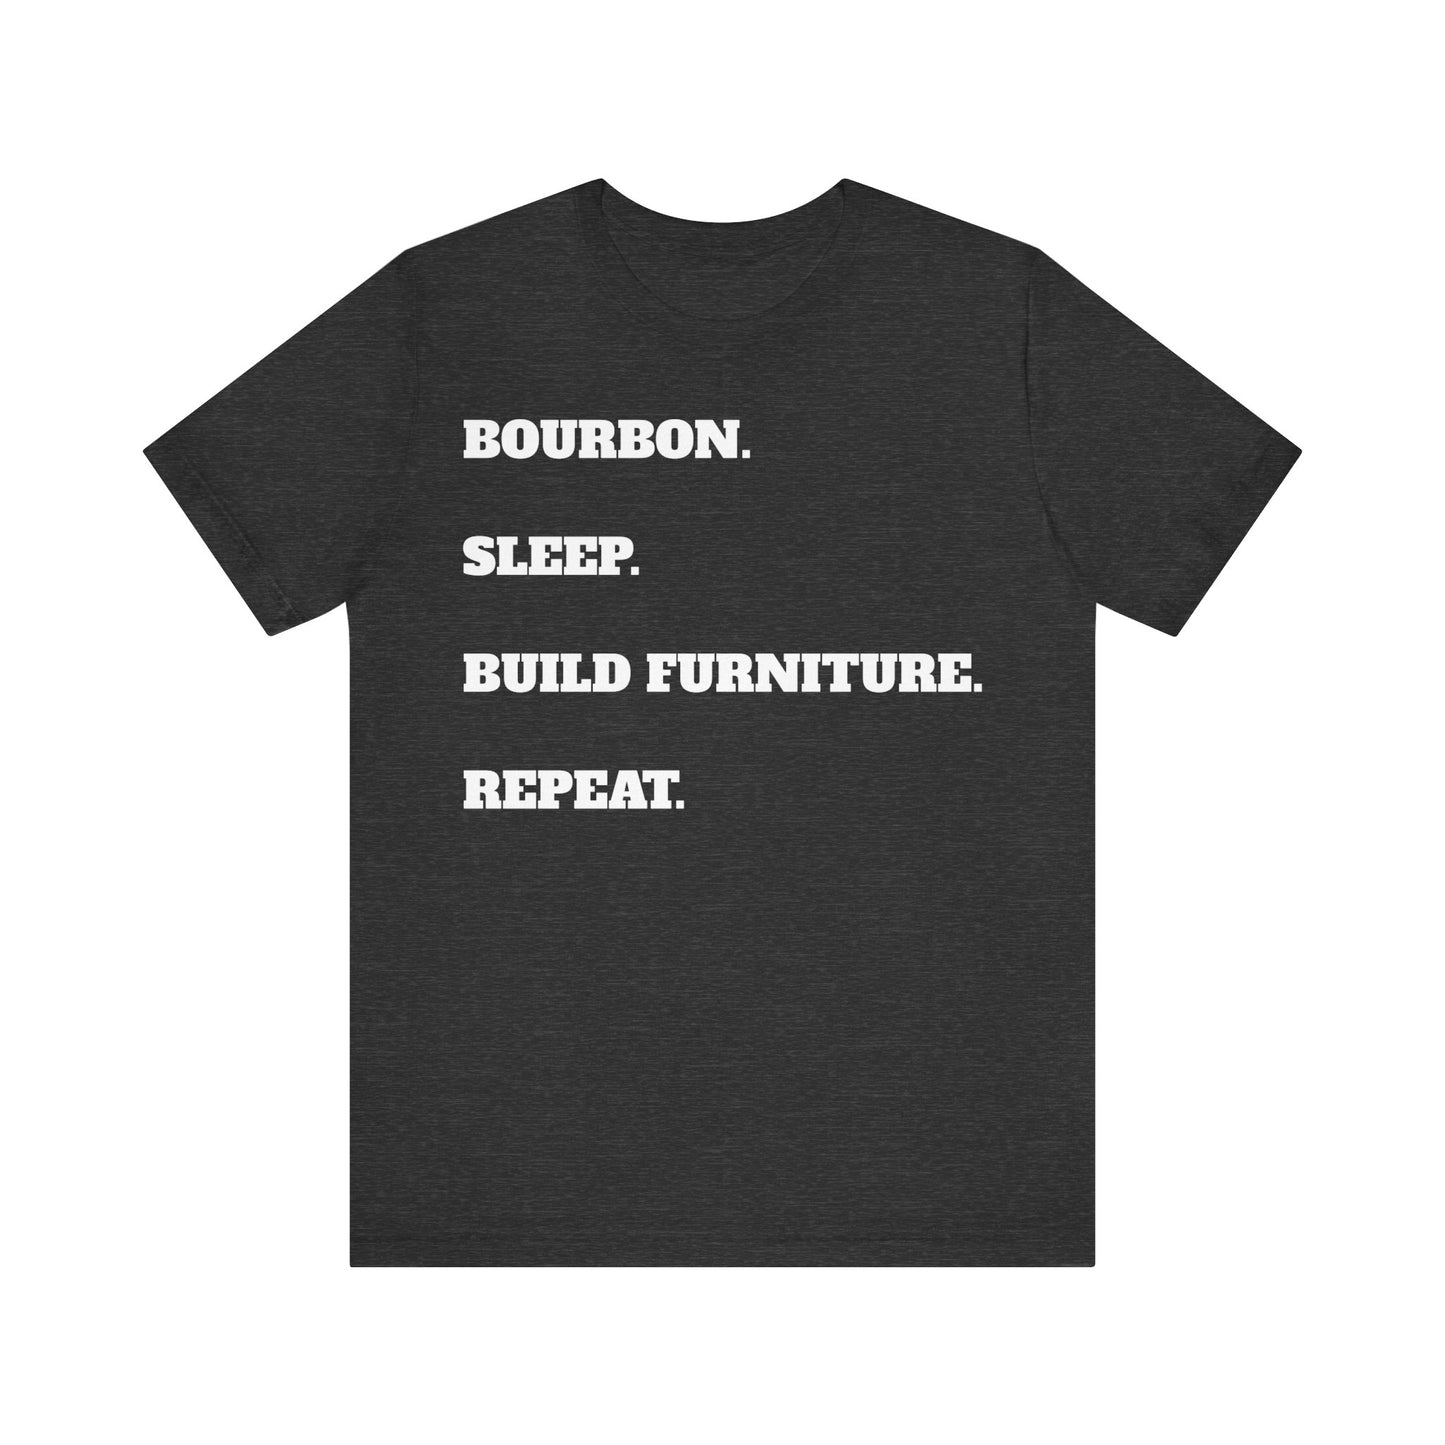 Bourbon. Sleep. Build Furniture. Repeat.